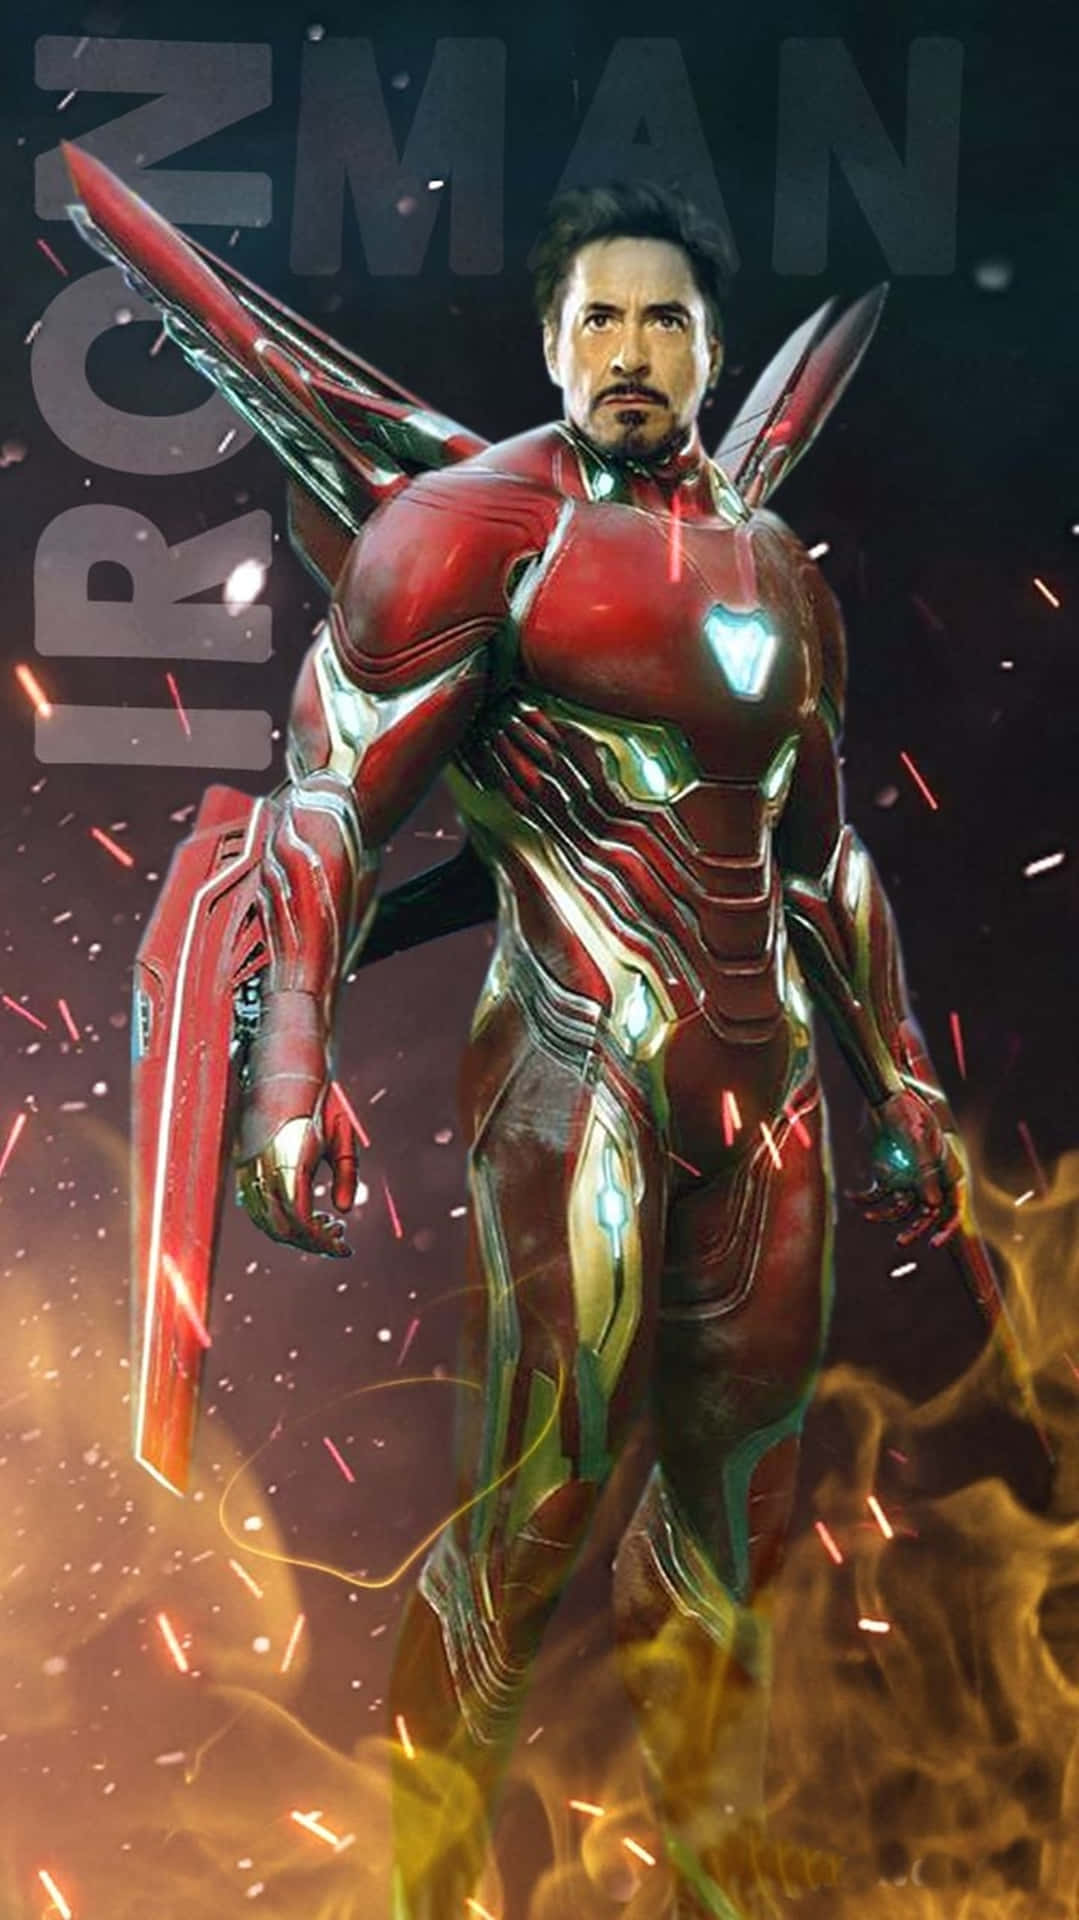 ¡descargael Fondo De Pantalla Icónico Del Superhéroe Iron Man Directamente En Tu Móvil! Fondo de pantalla